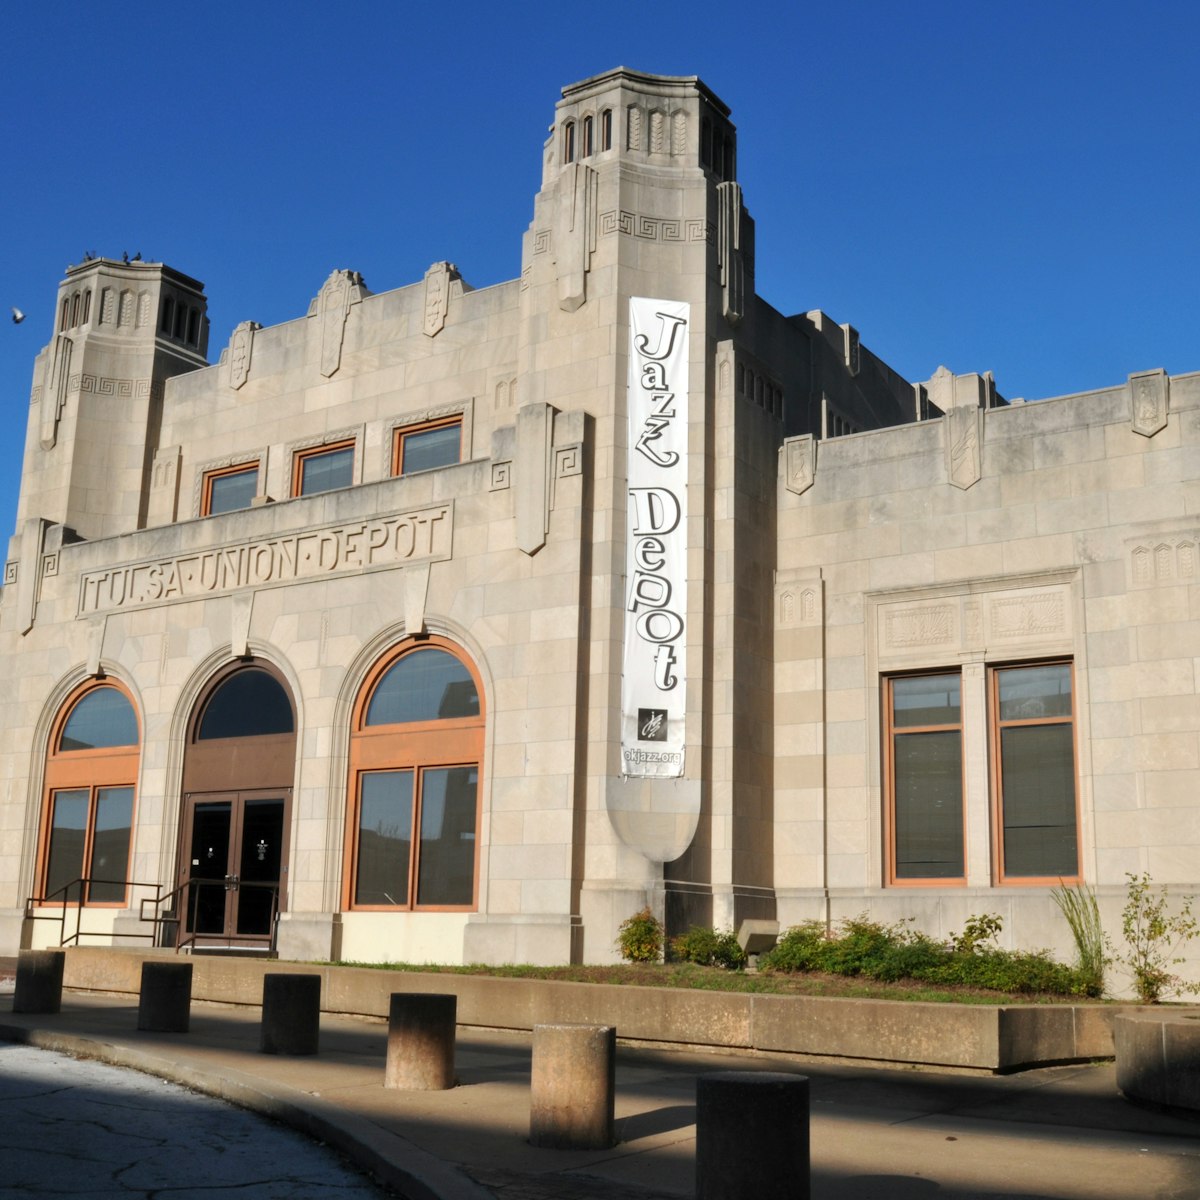 The historic Tulsa Union Depot, an art deco landmark and former railway station, now houses the Oklahoma Jazz Hall of Fame.
